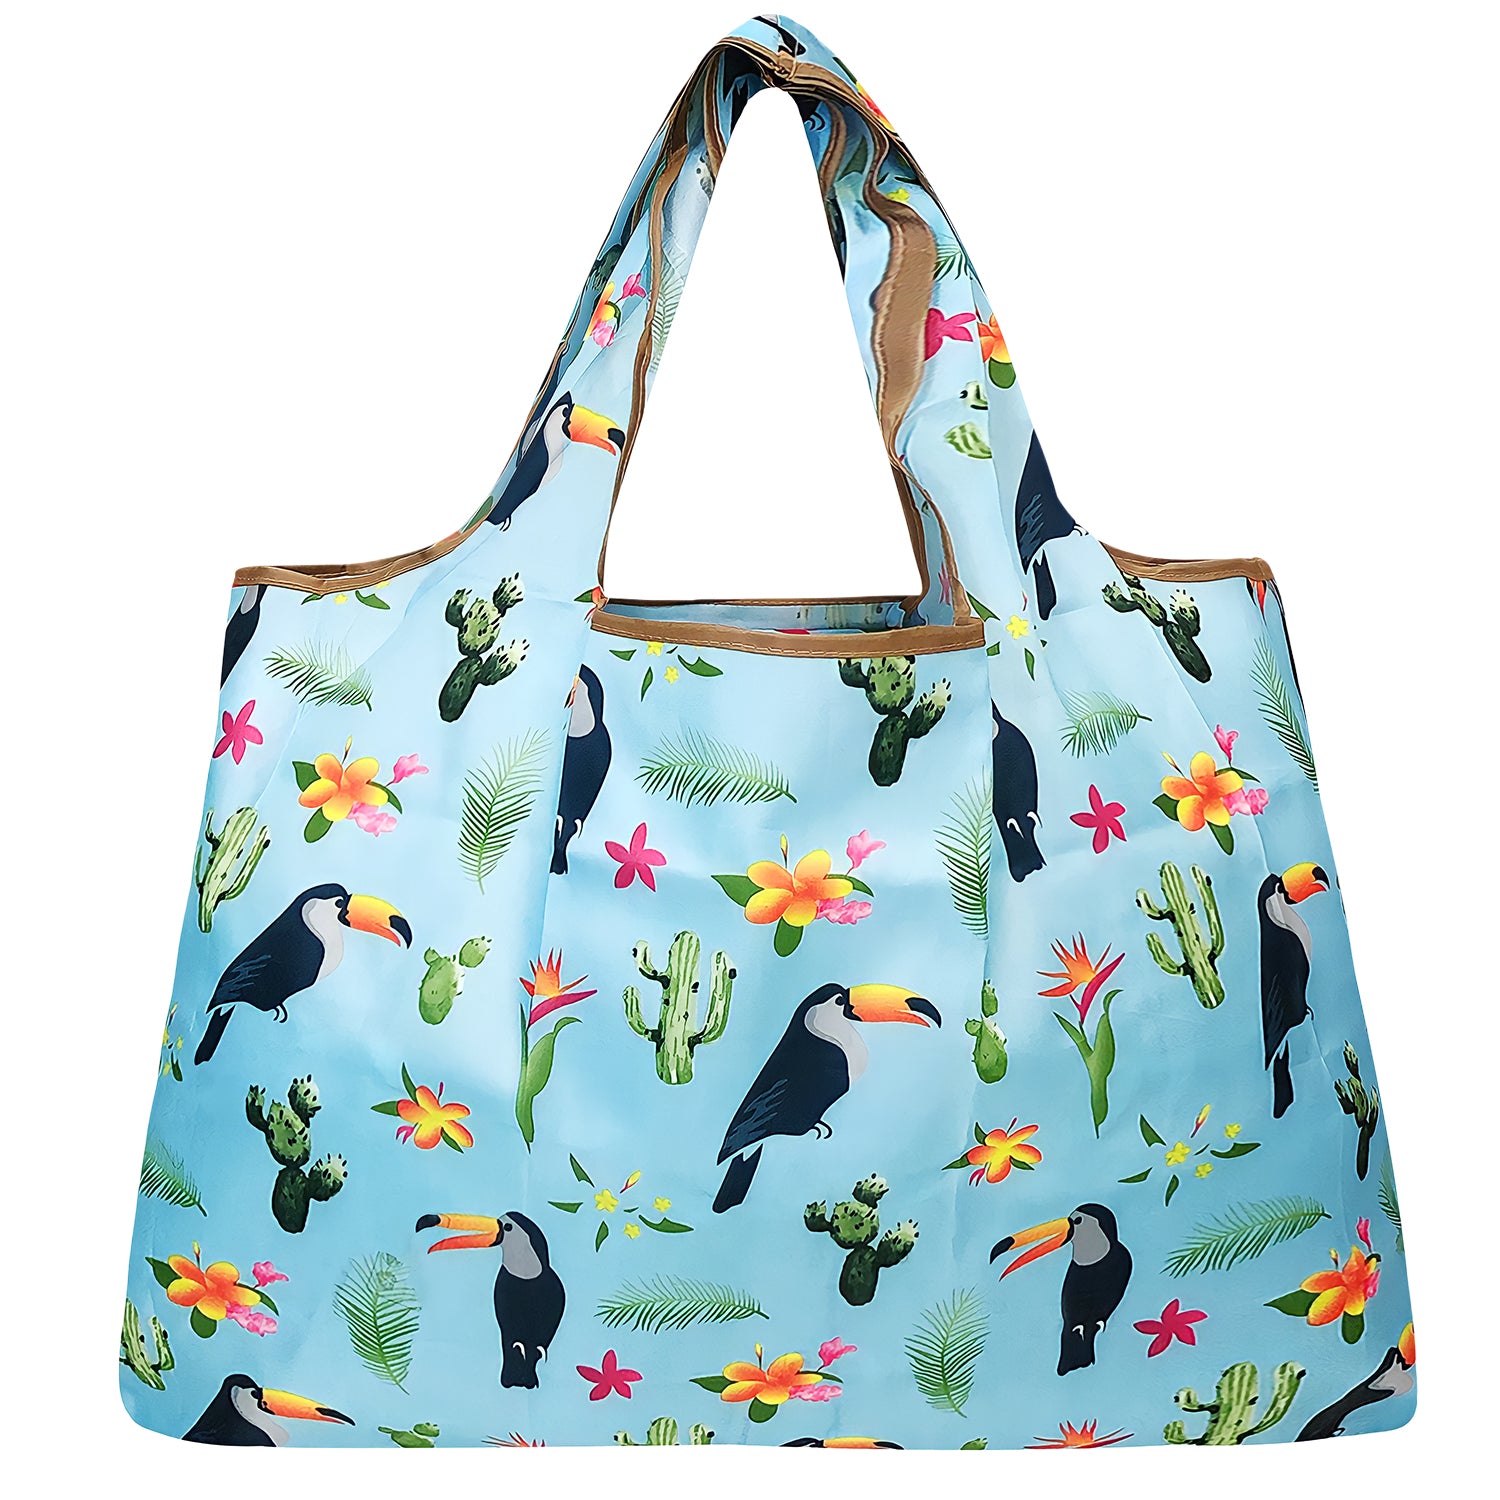 Wrapables Eco-Friendly Large Nylon Reusable Shopping Bag